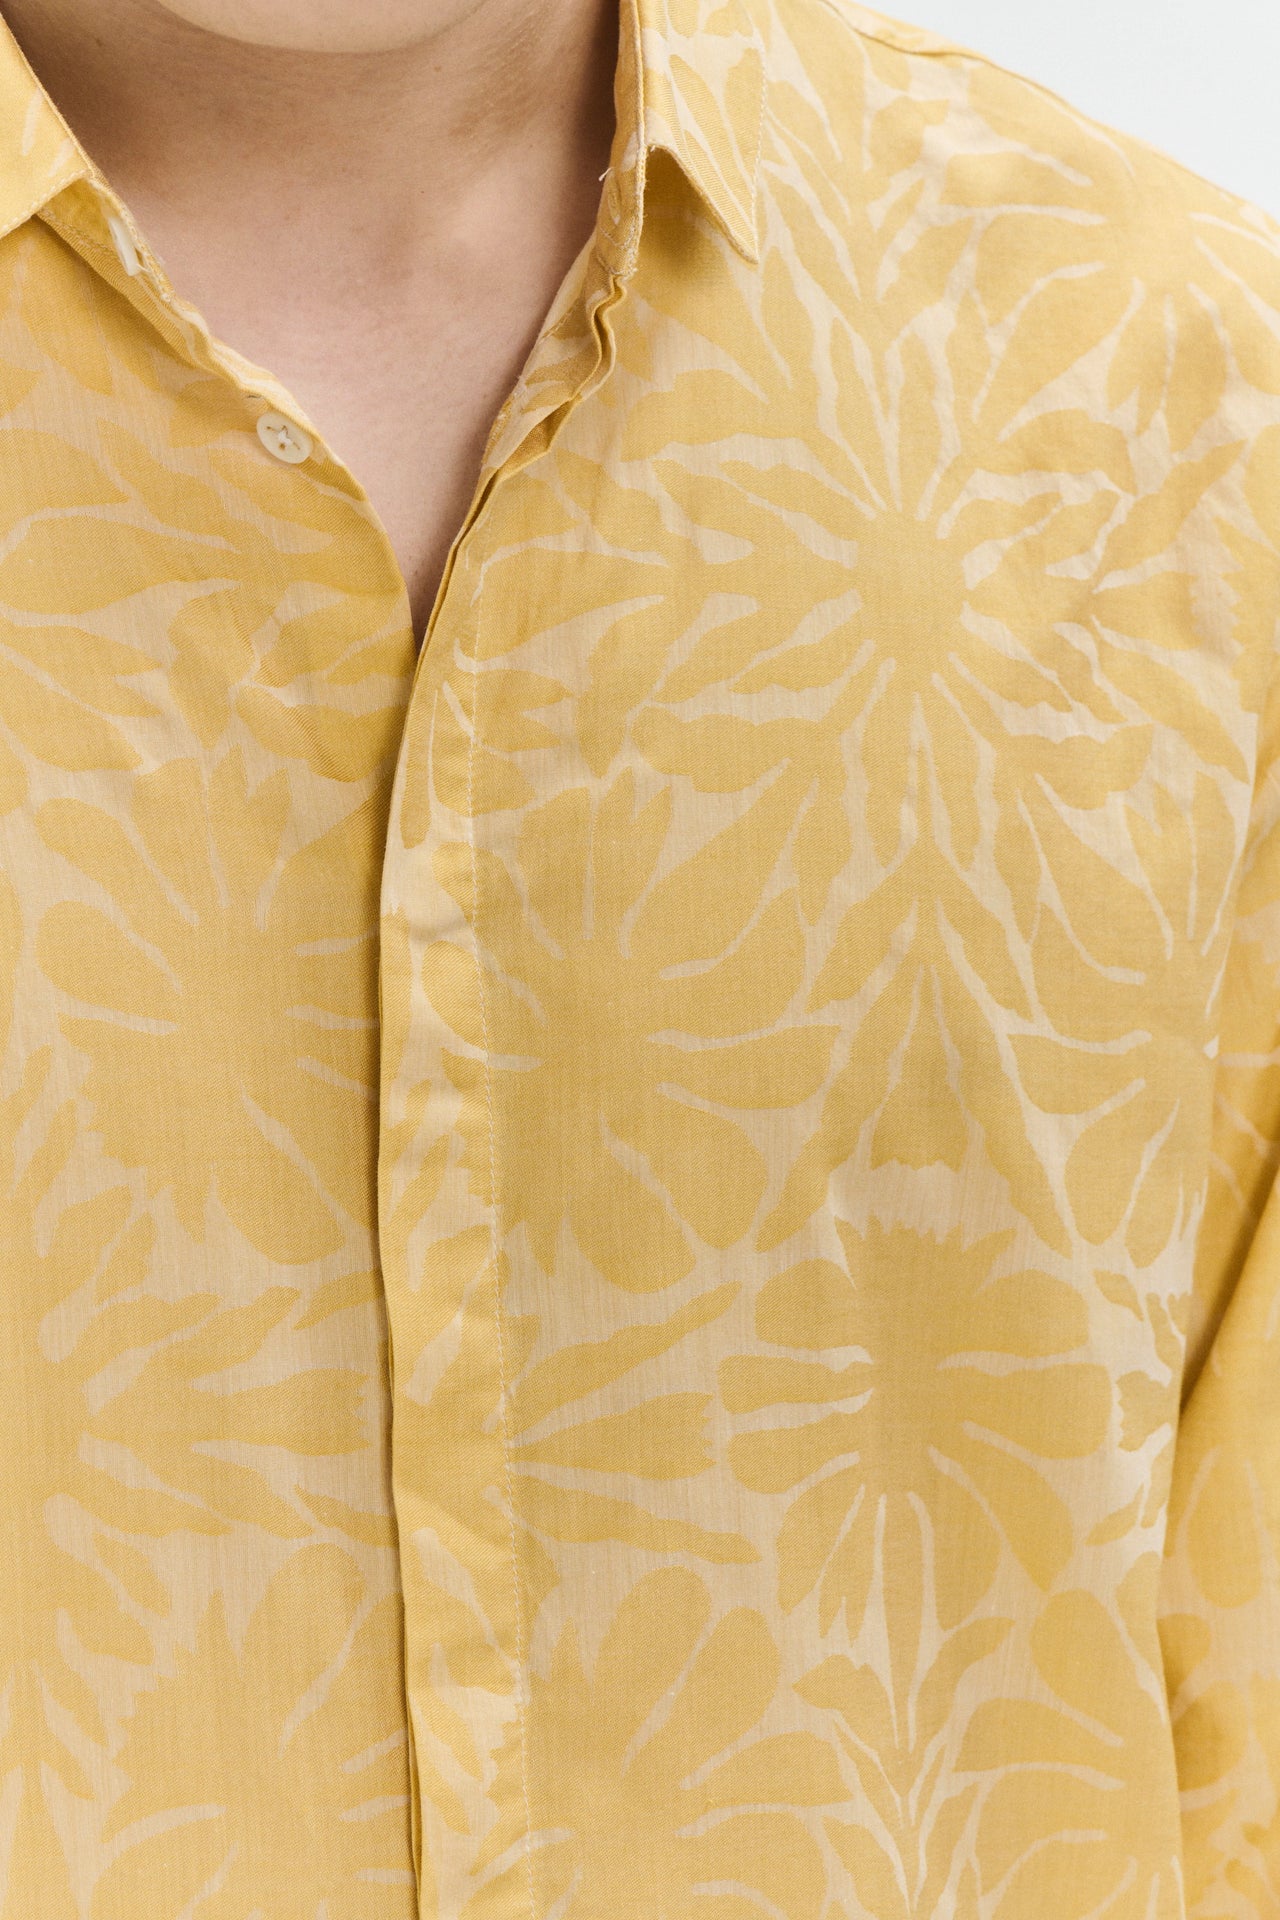 Cute Round Collar Shirt in a Yellow and Cream Jacquard Italian Cotton